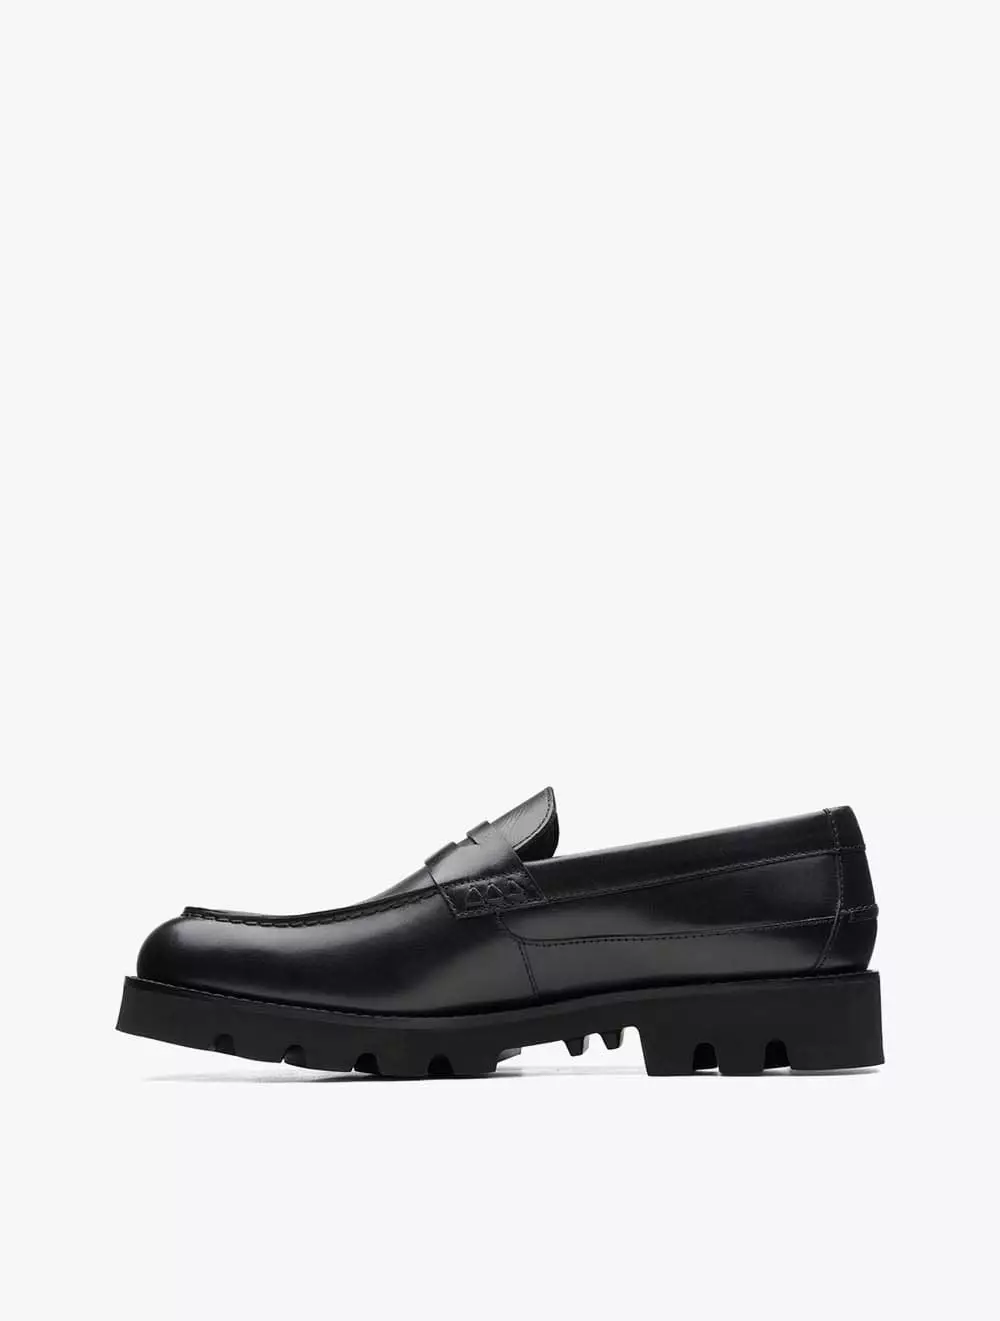 Jual Clarks Clarks Badell Slip Men's Loafers- Black Leather Original ...